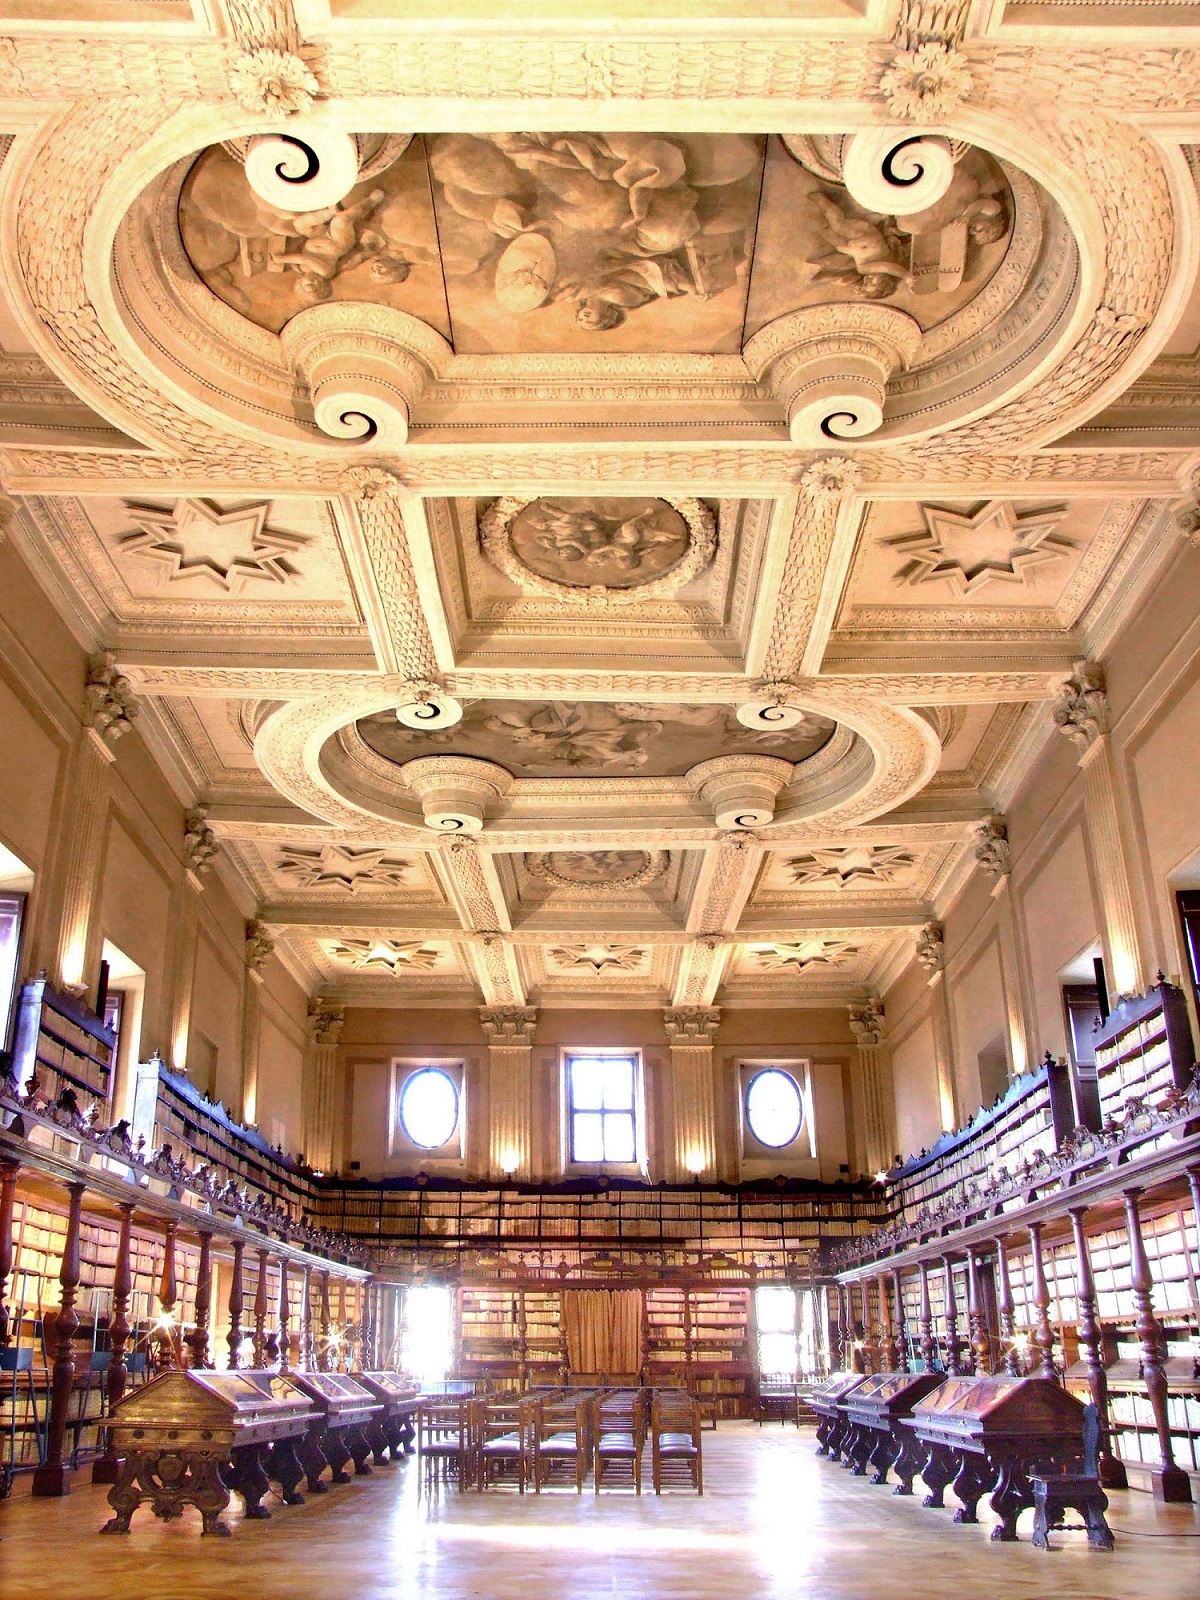 Bbiblioteca vallicelliana rome italy 02.jpg